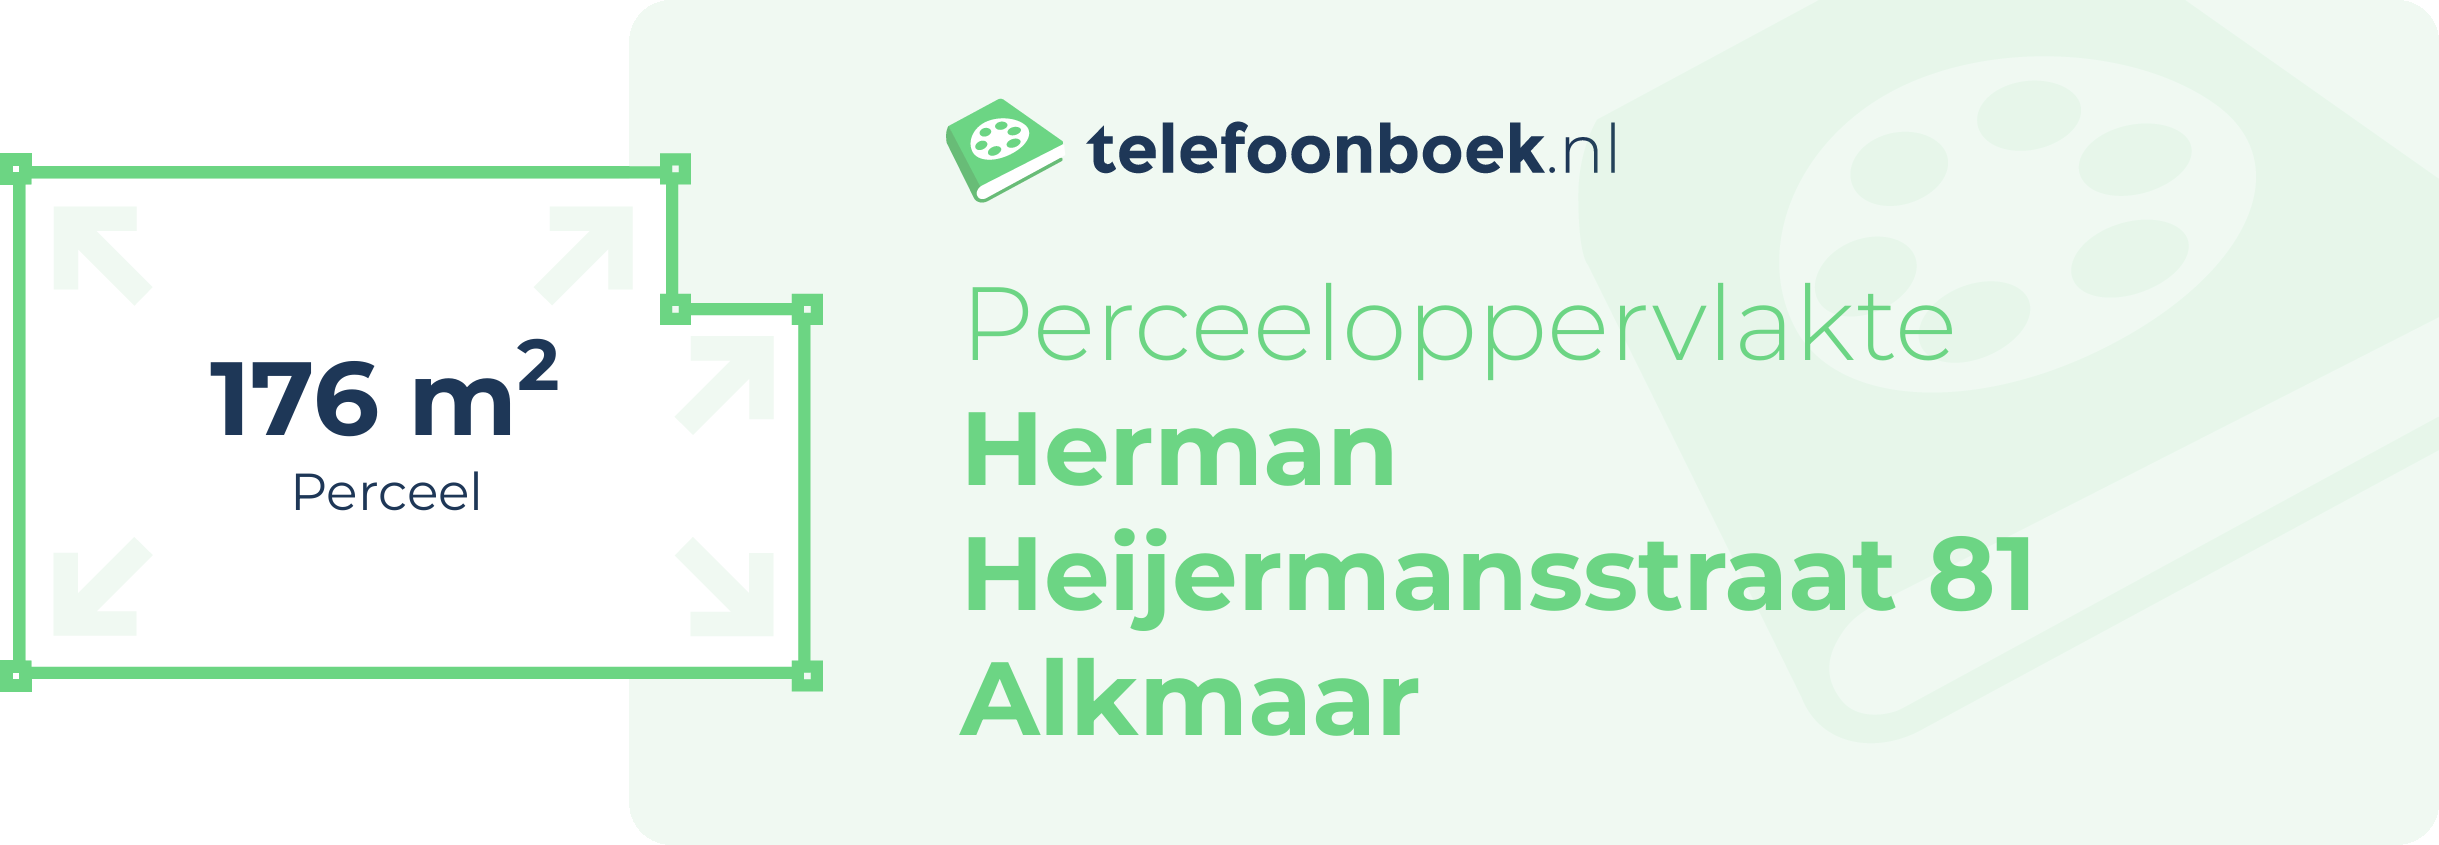 Perceeloppervlakte Herman Heijermansstraat 81 Alkmaar